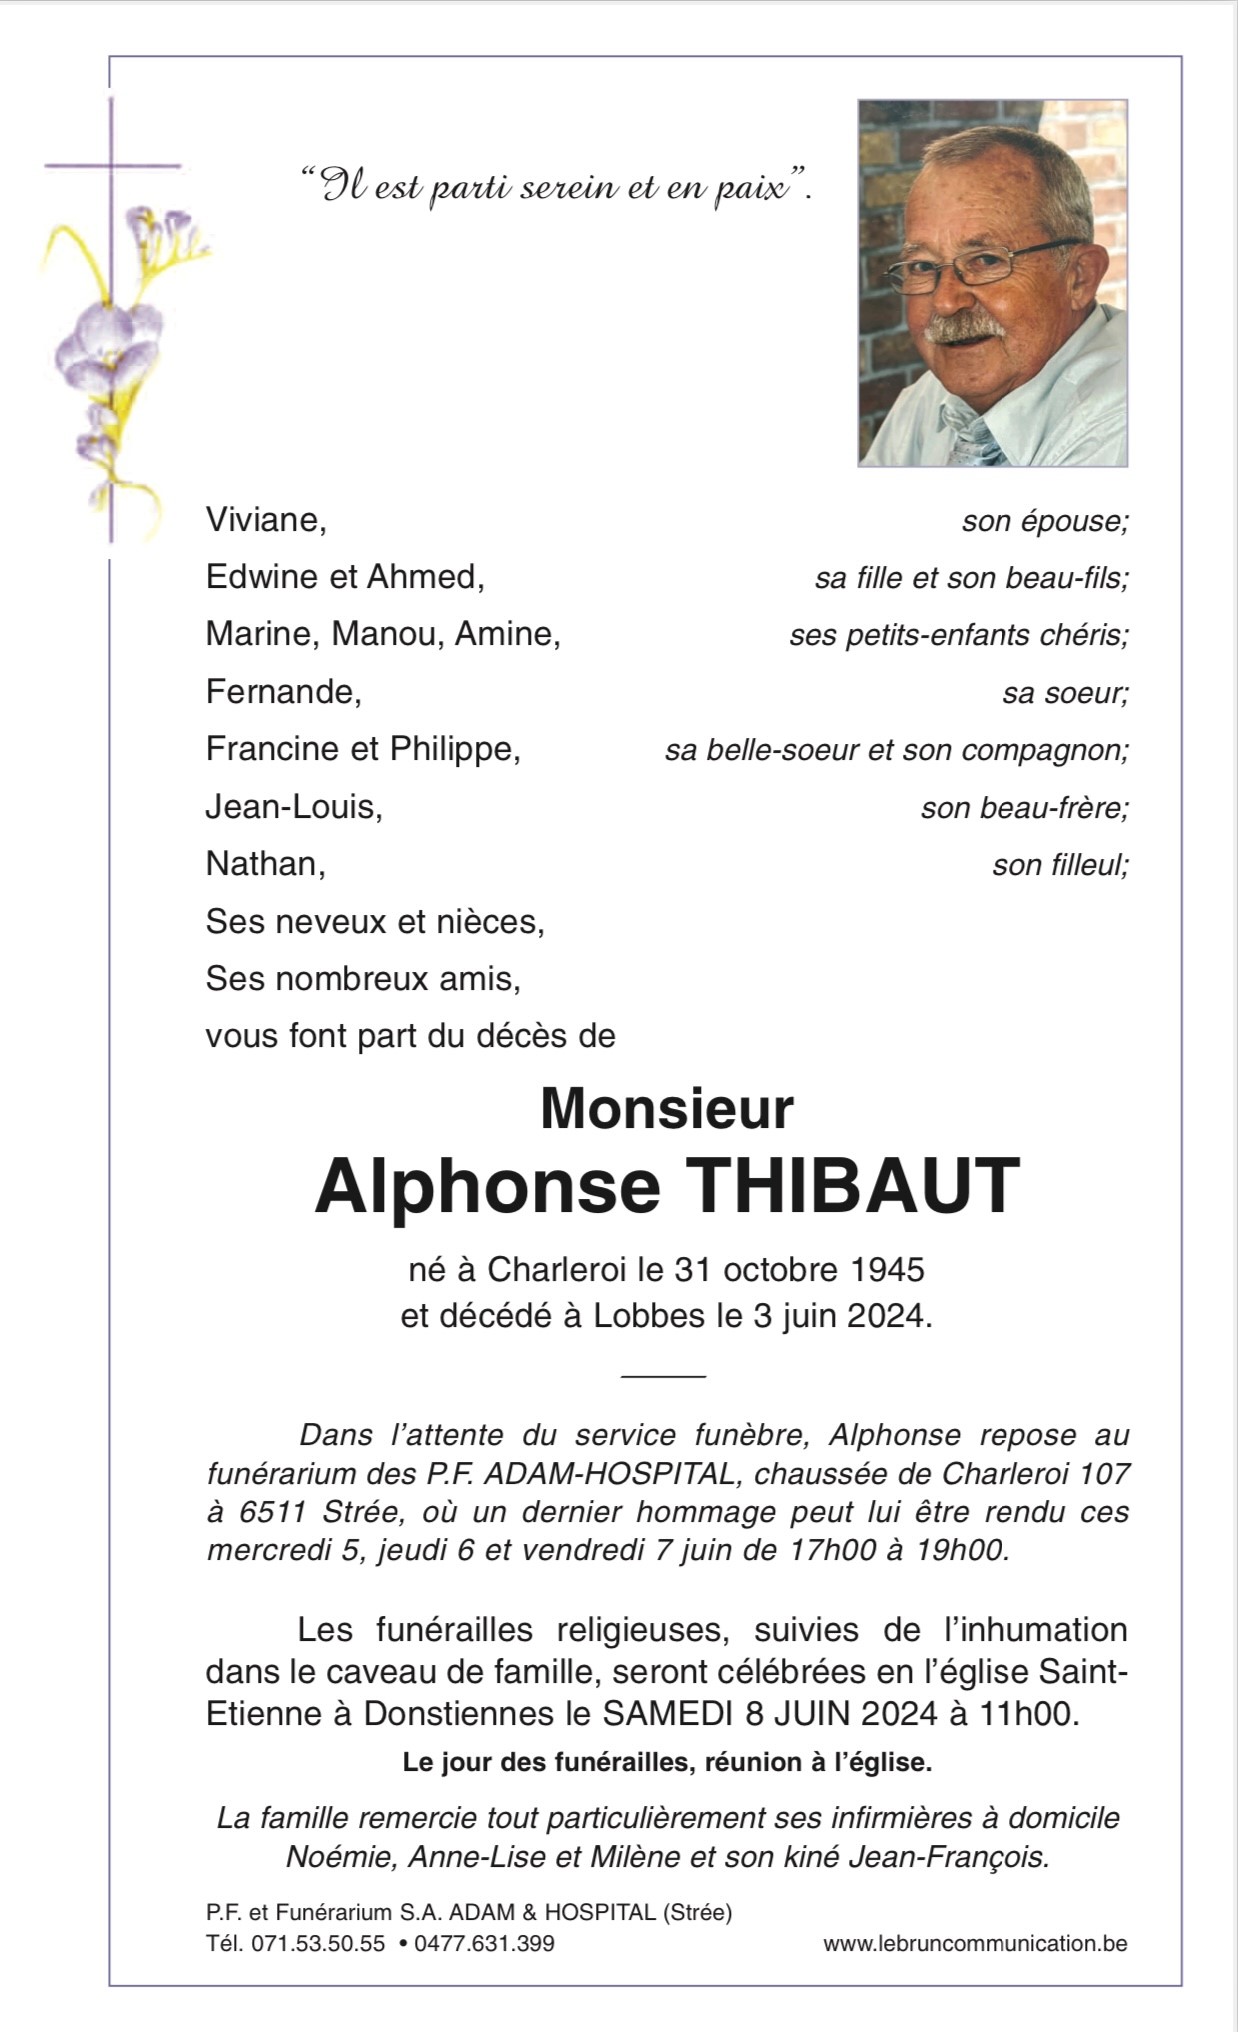 Alphonse THIBAUT | Funérailles Adam Hospital